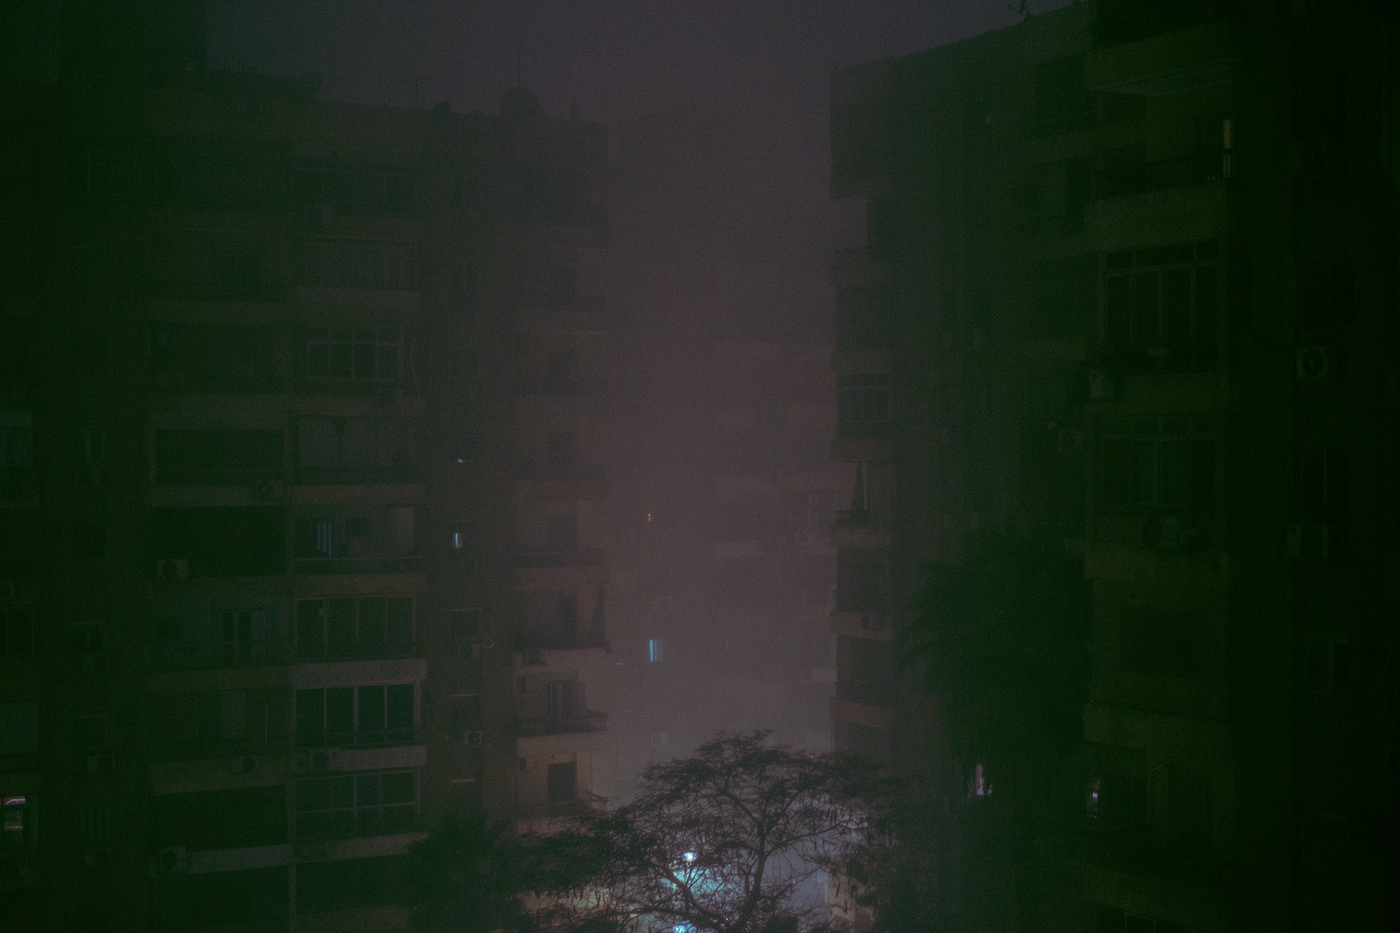 COLOURING haze Low light Photography mood night night photography outdoors street photography